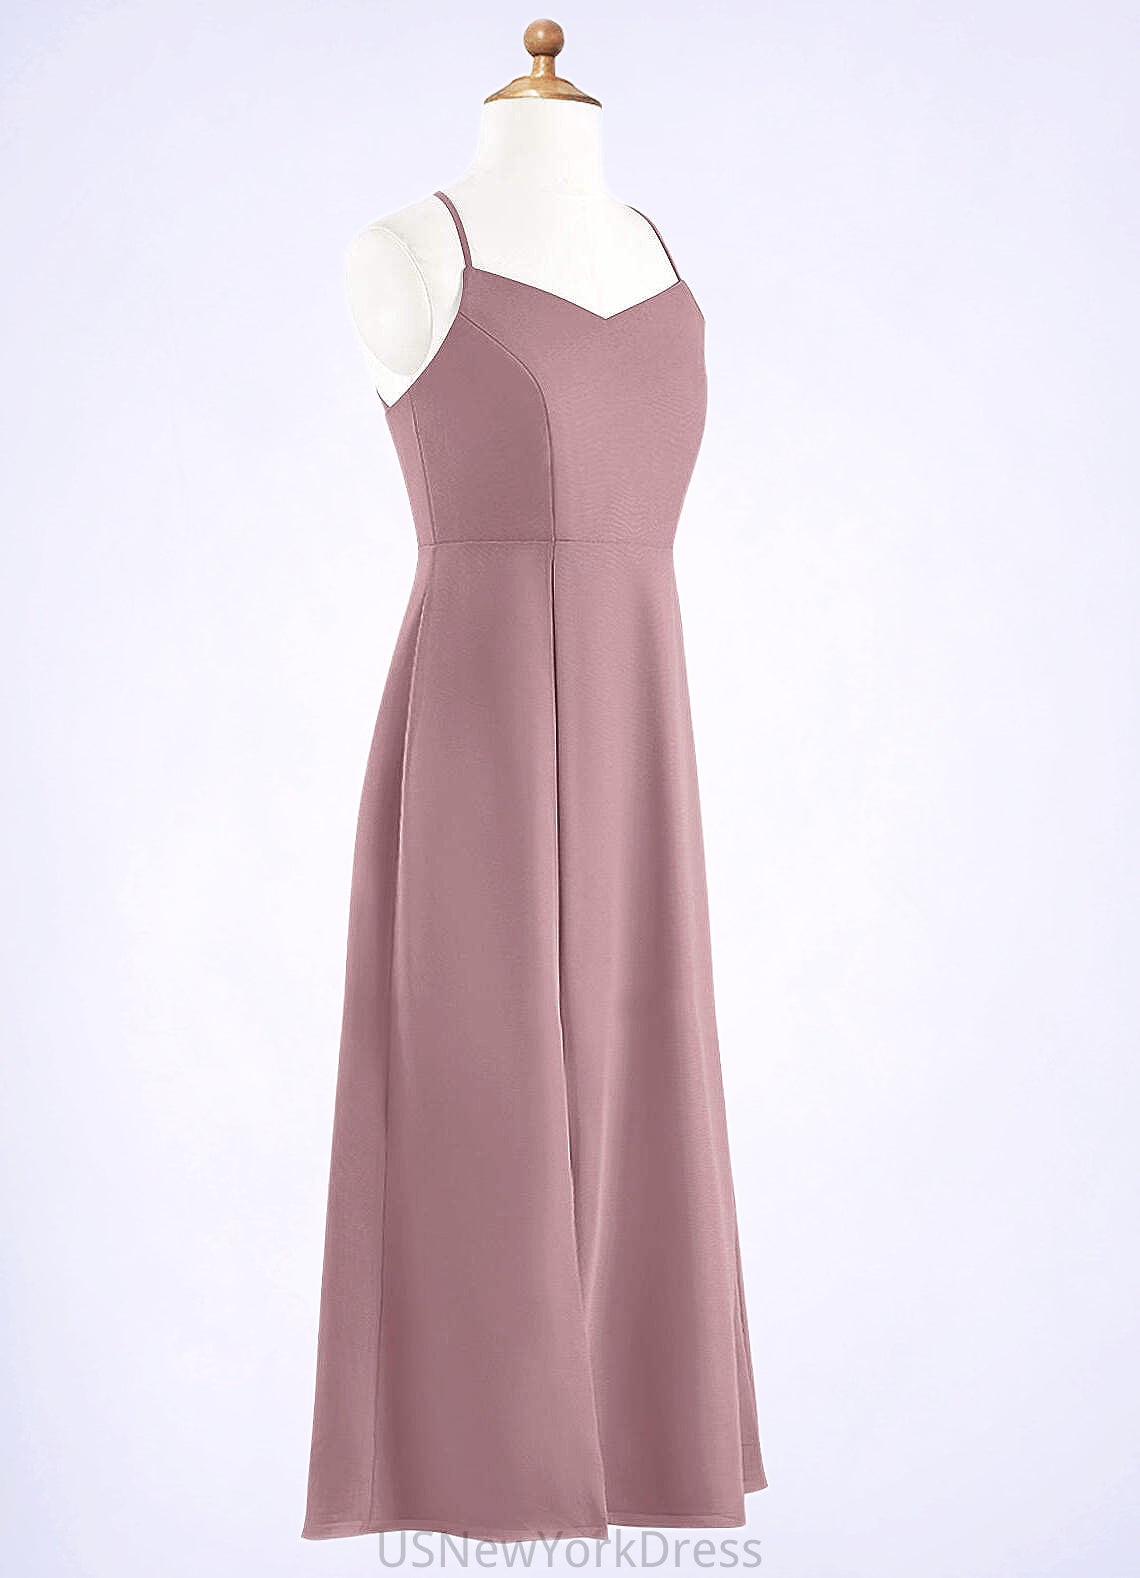 Ariel A-Line Chiffon Floor-Length Junior Bridesmaid Dress dusty rose DJP0022856